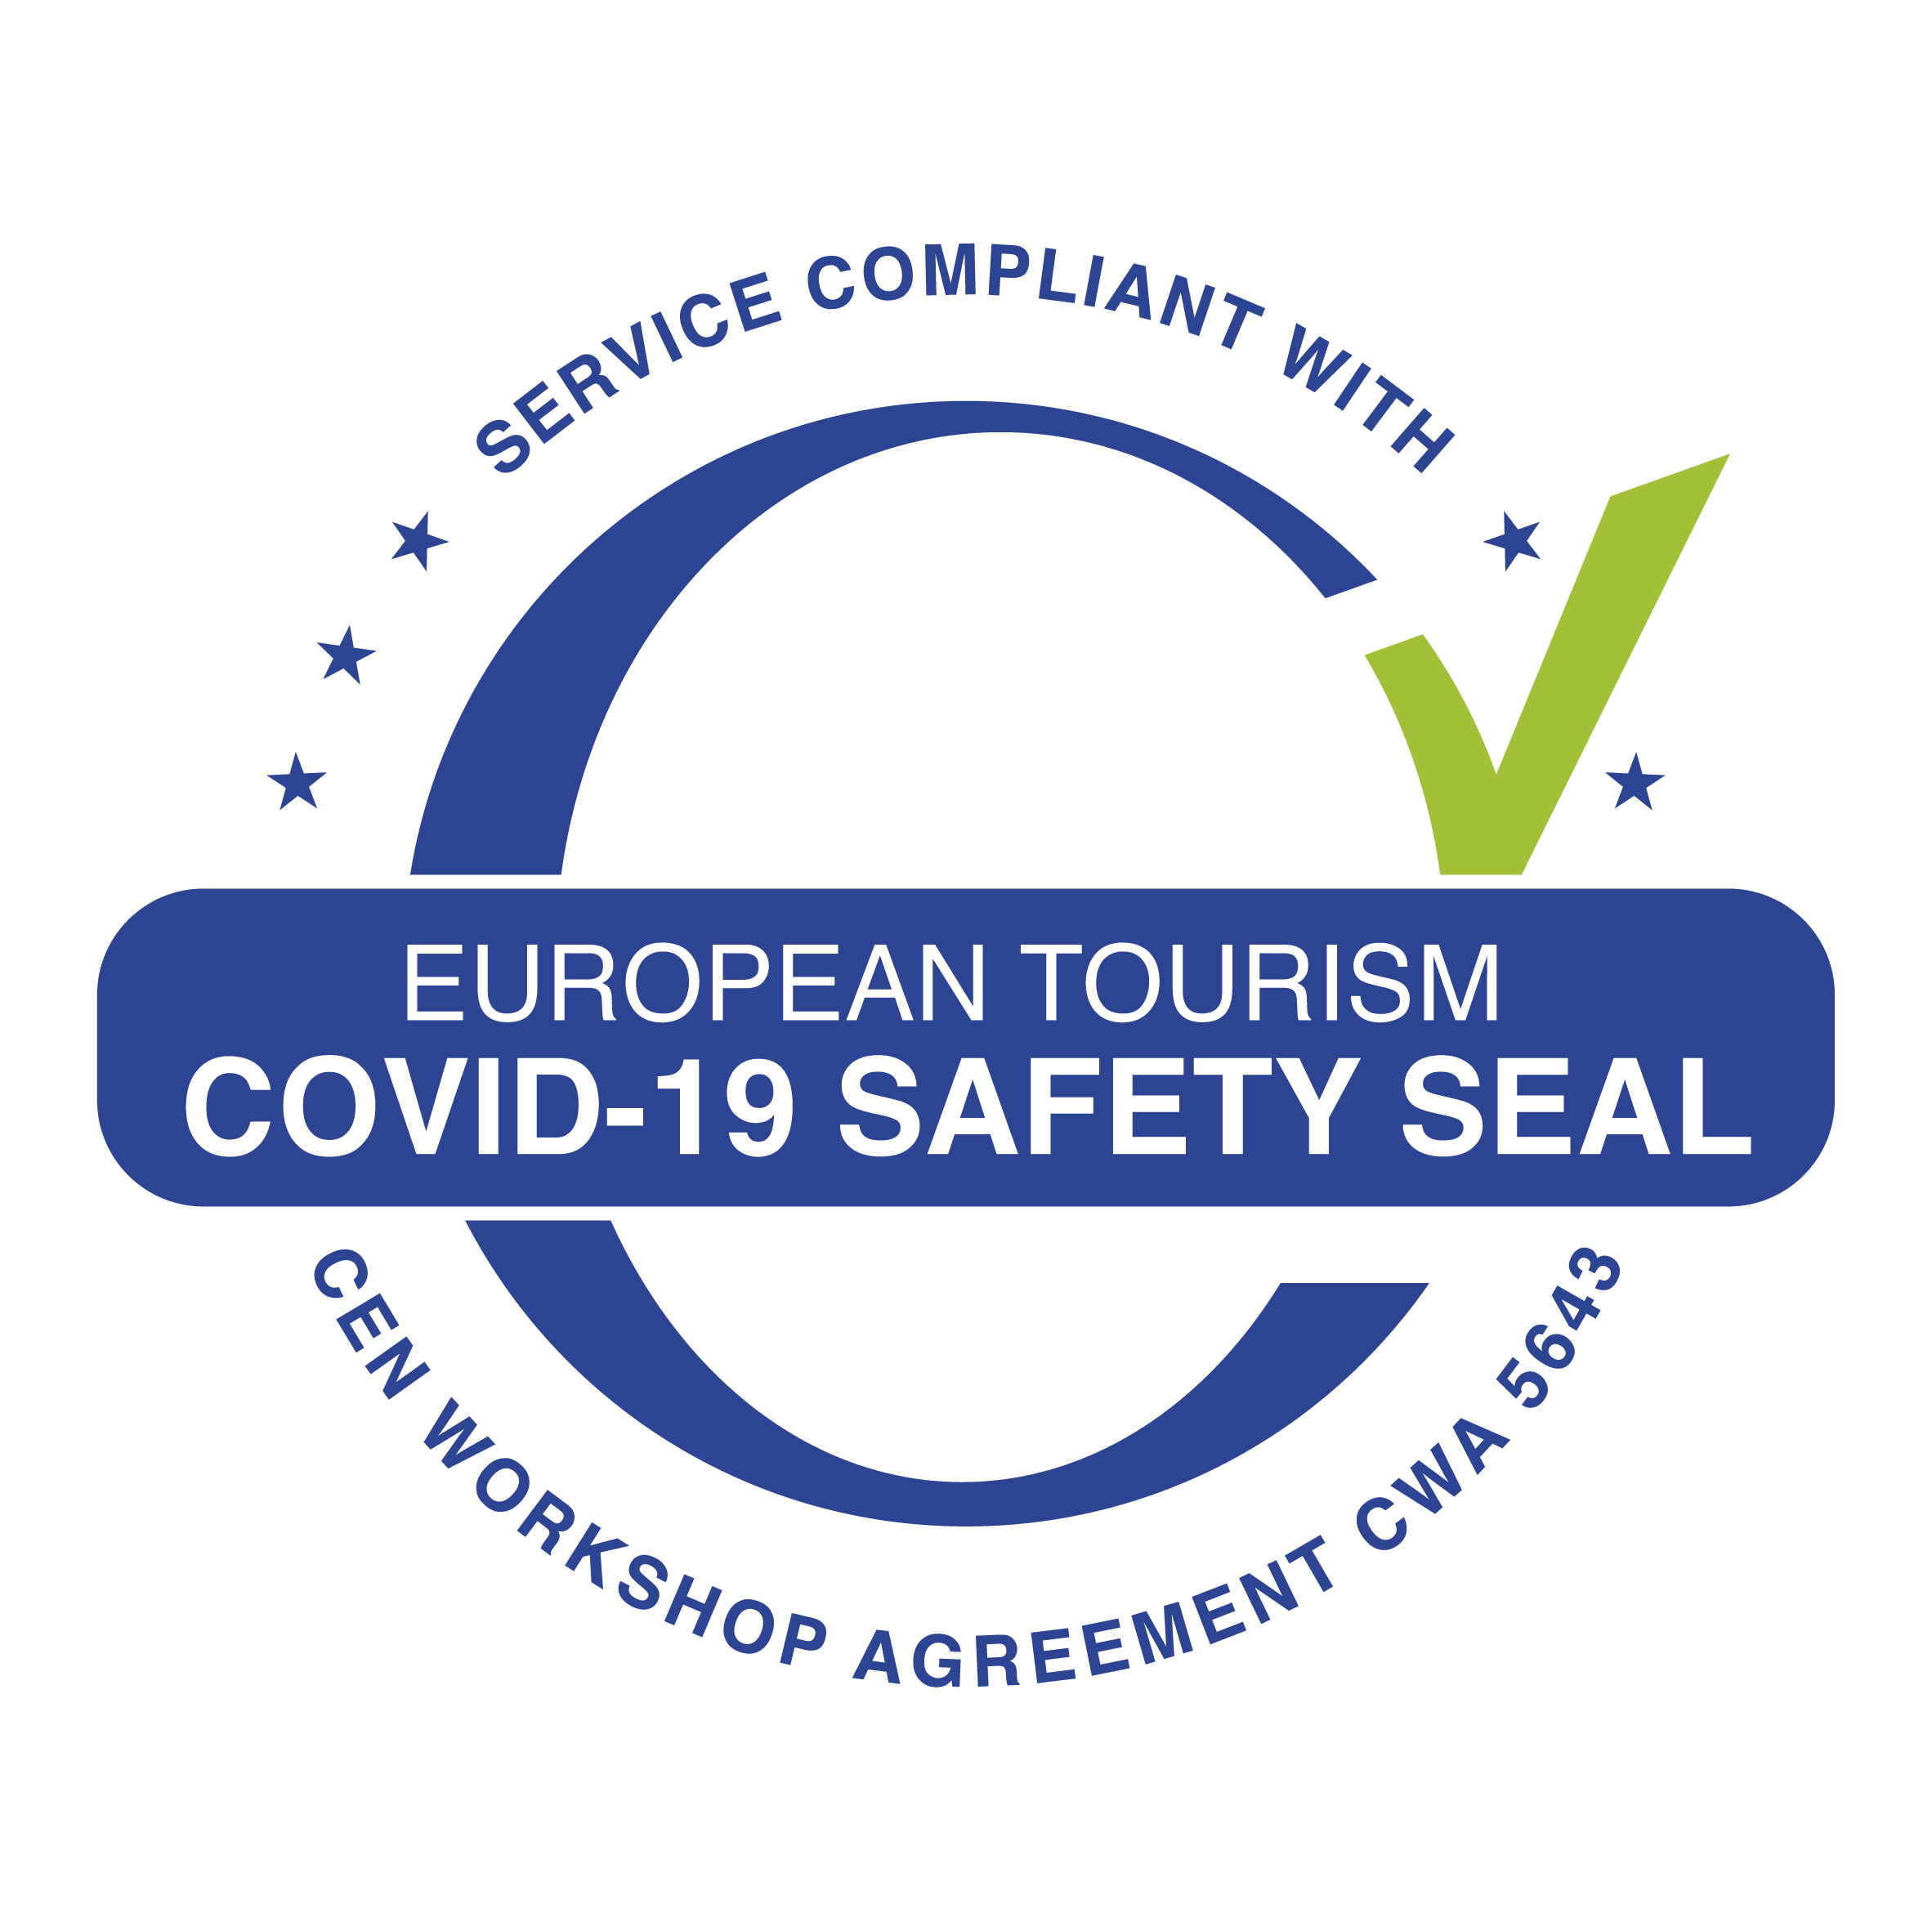 





European Tourism Covid-19 Safety Seal



